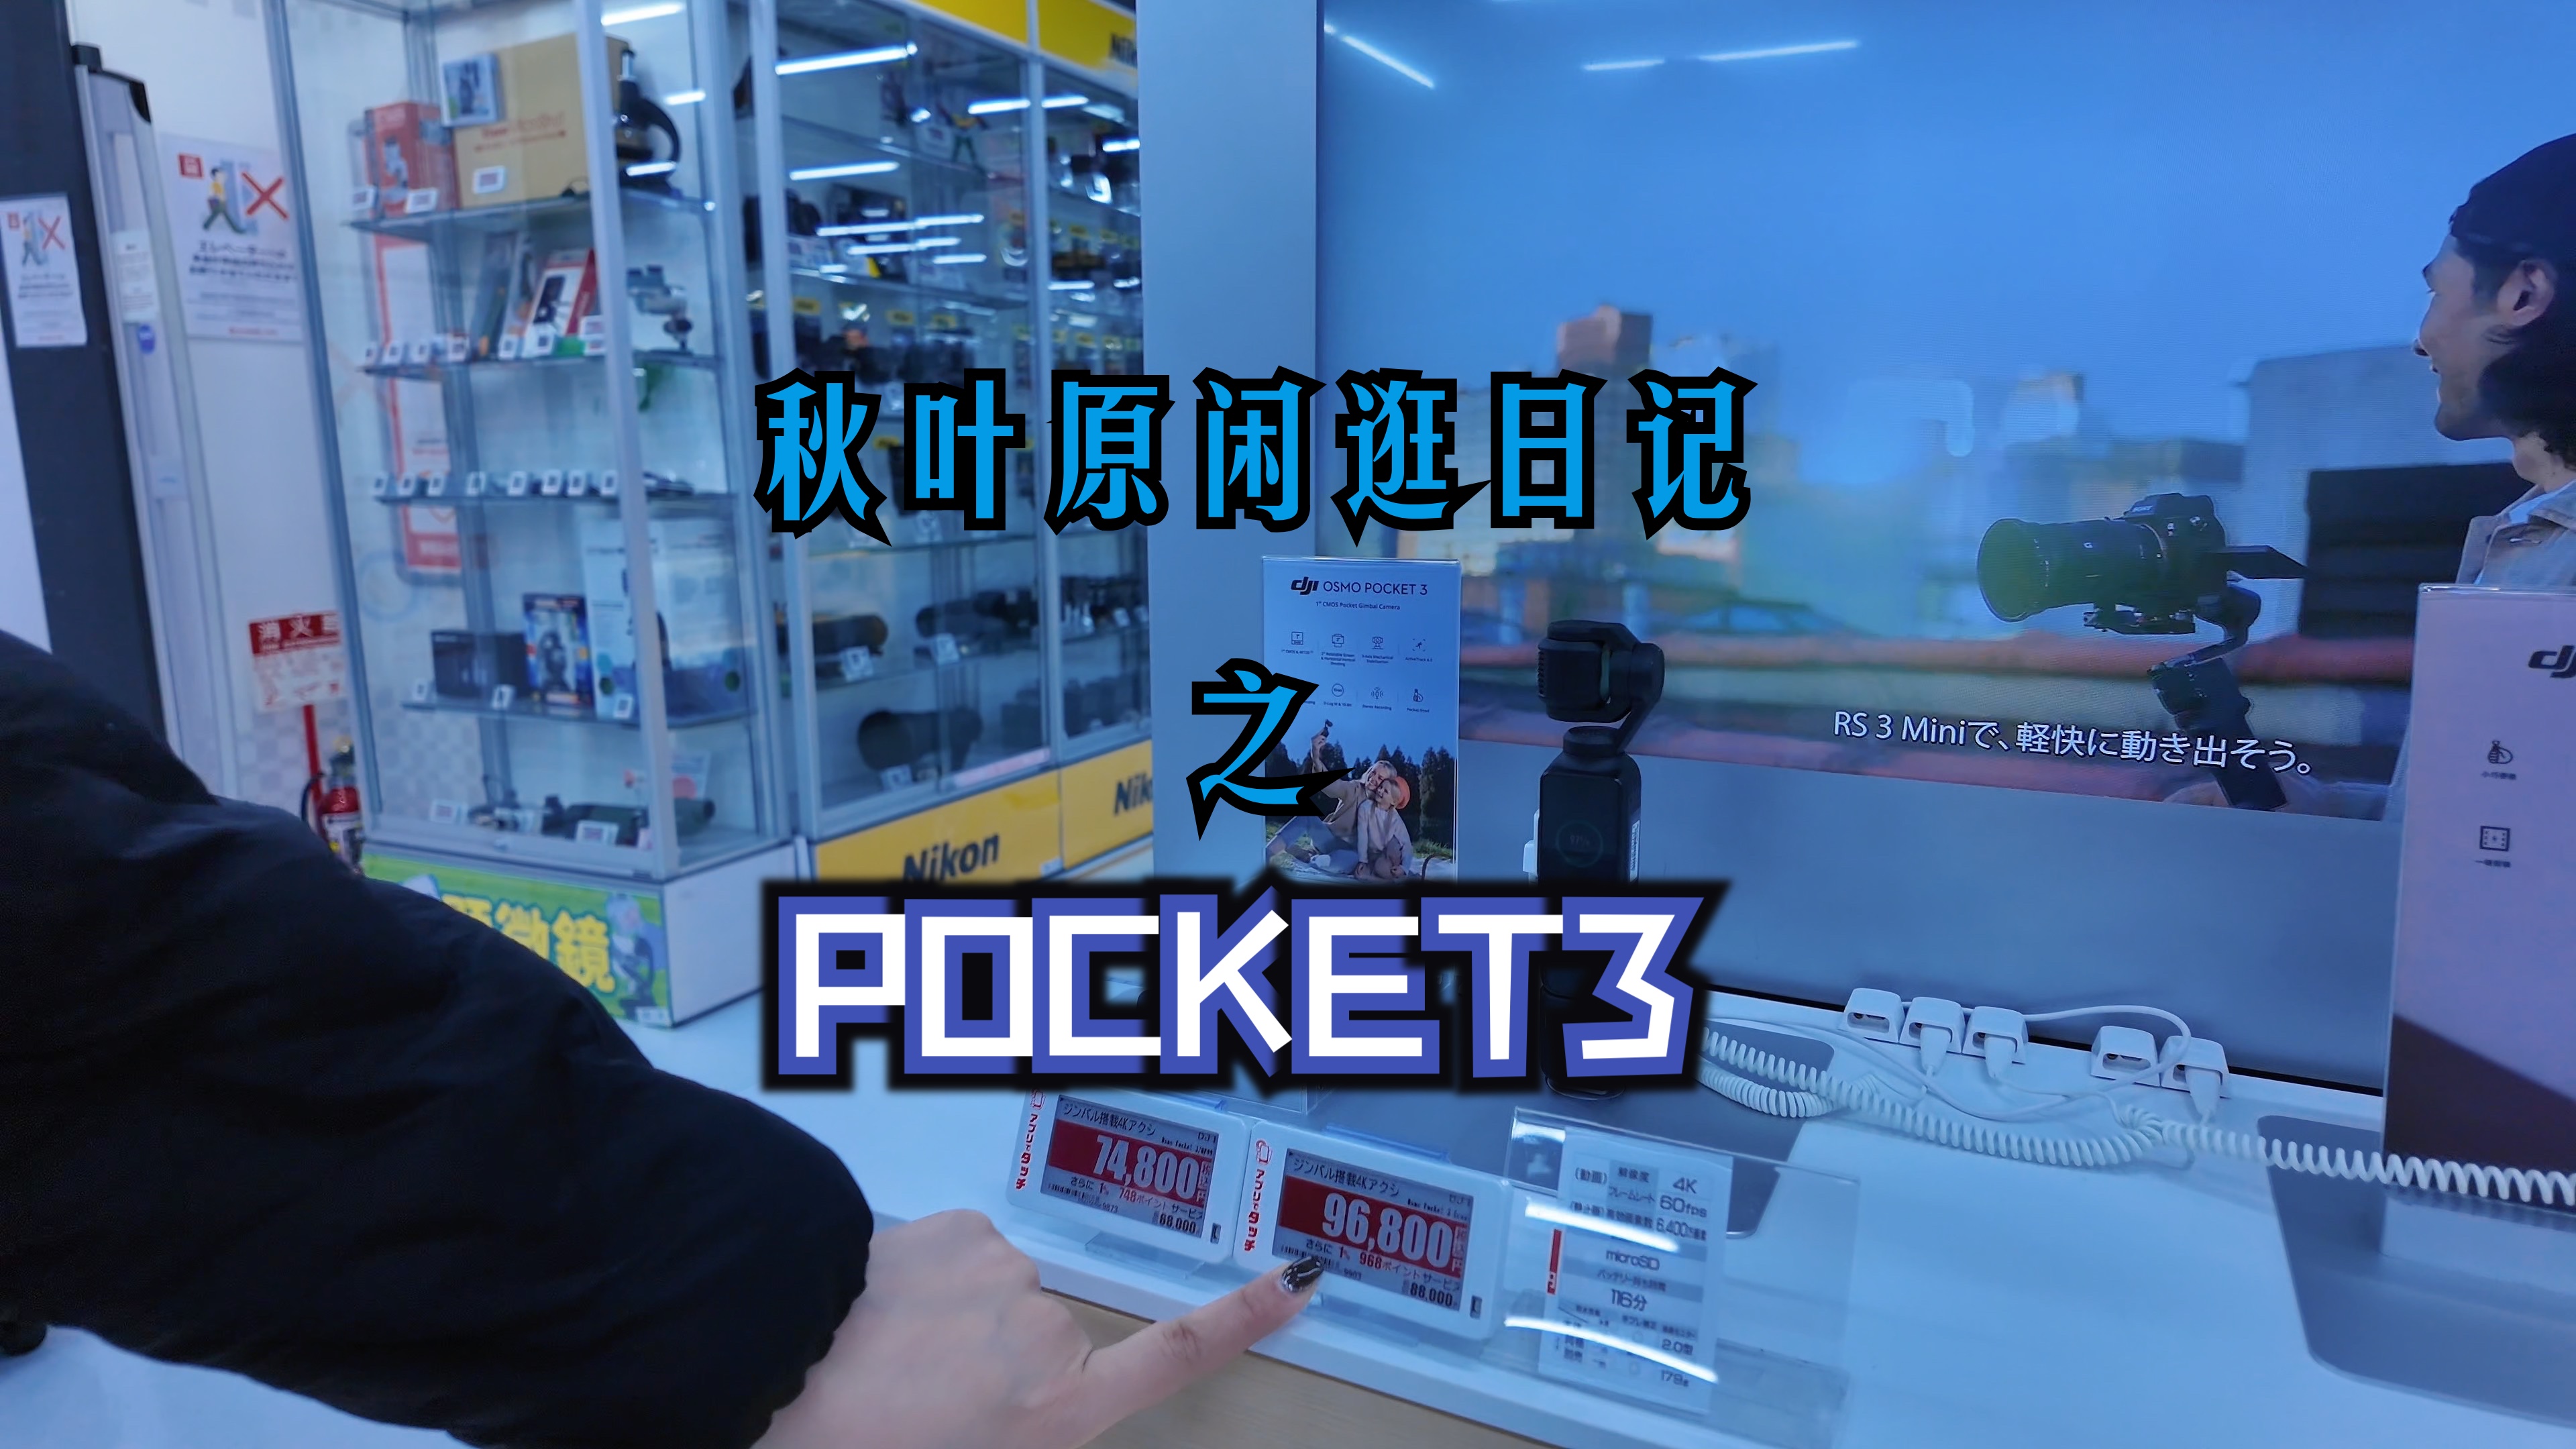 Pocket3在日本售卖